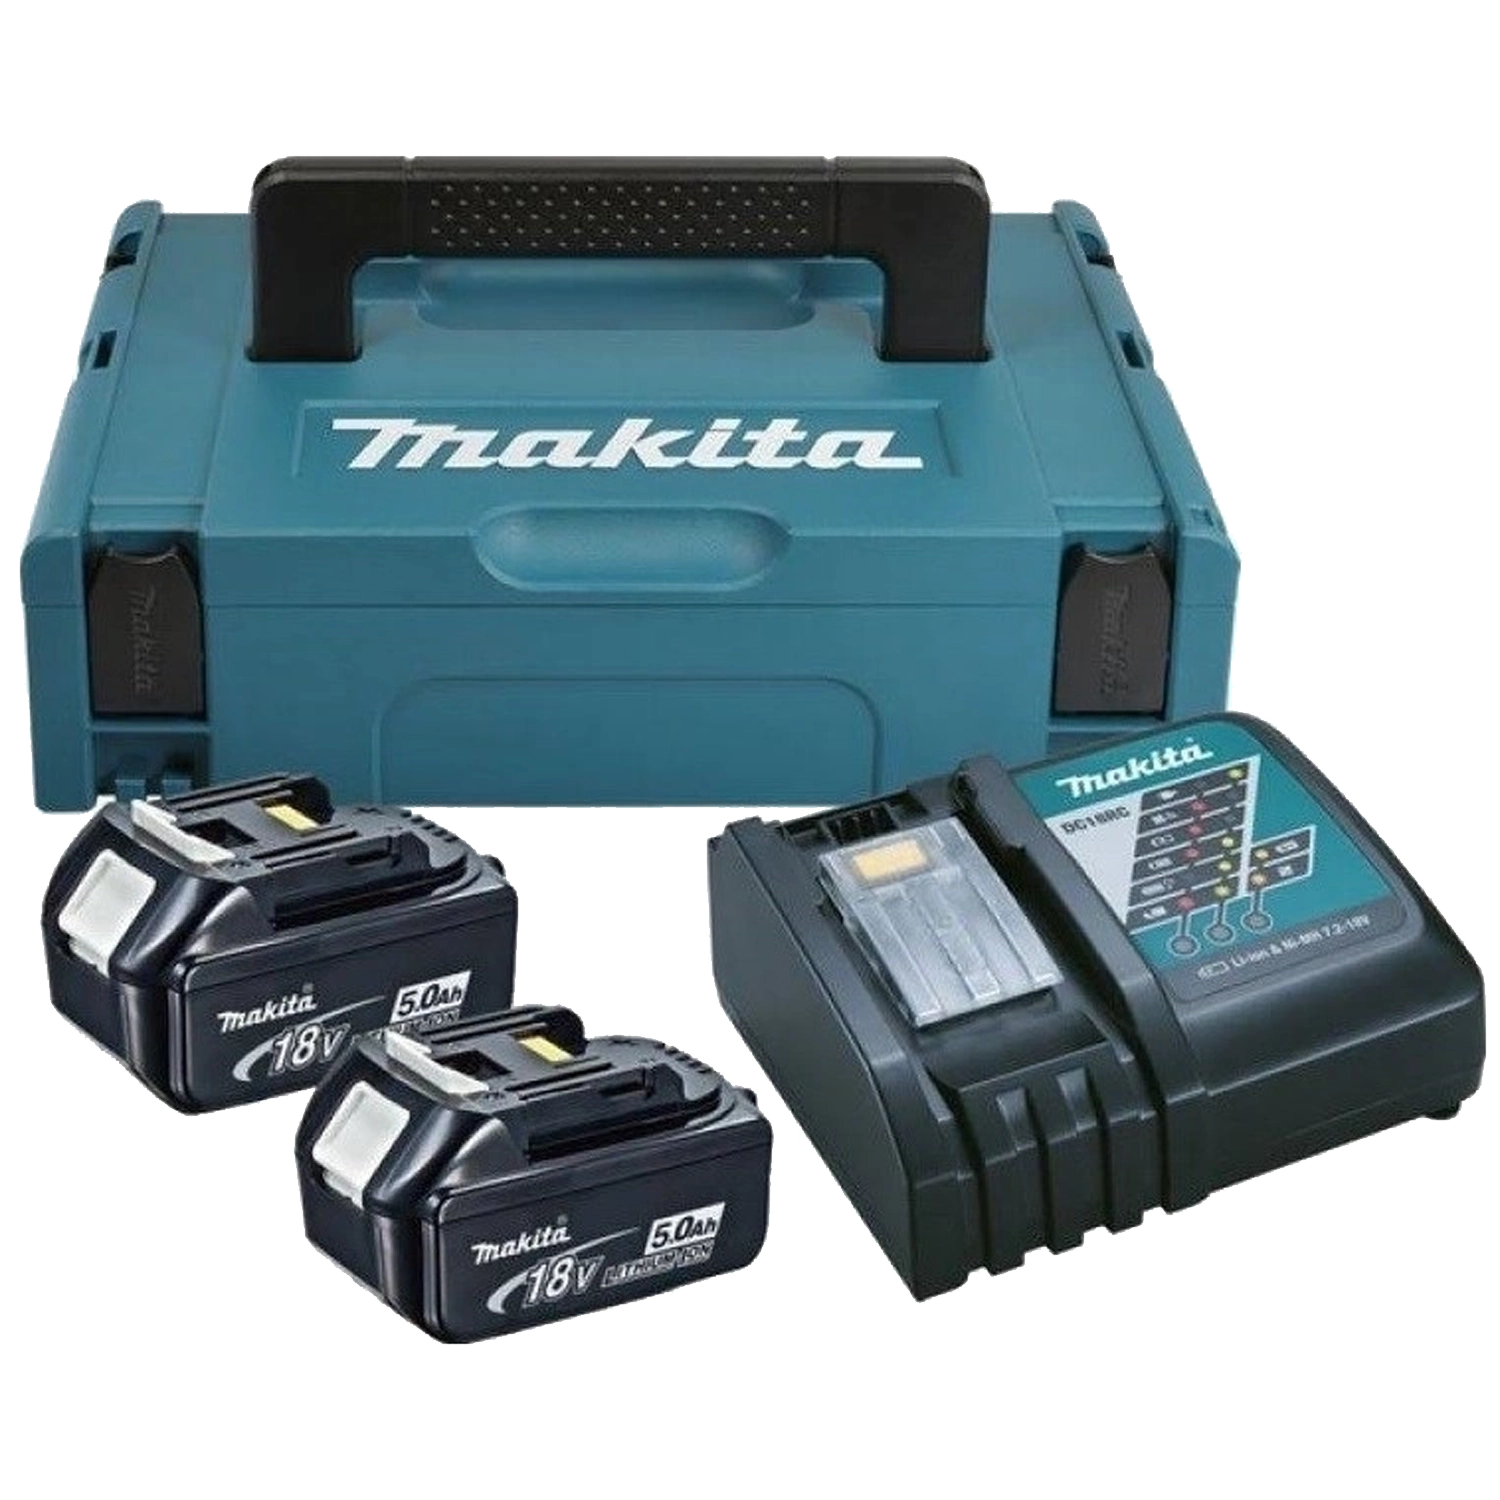 Makita Set Batterijen 18V: BL1850B: 2X5 Ah Li-ion + Lader DC18RC: Set van 2x5 Ah Li-ion batterijen en een DC18RC lader voor Makita gereedschap.